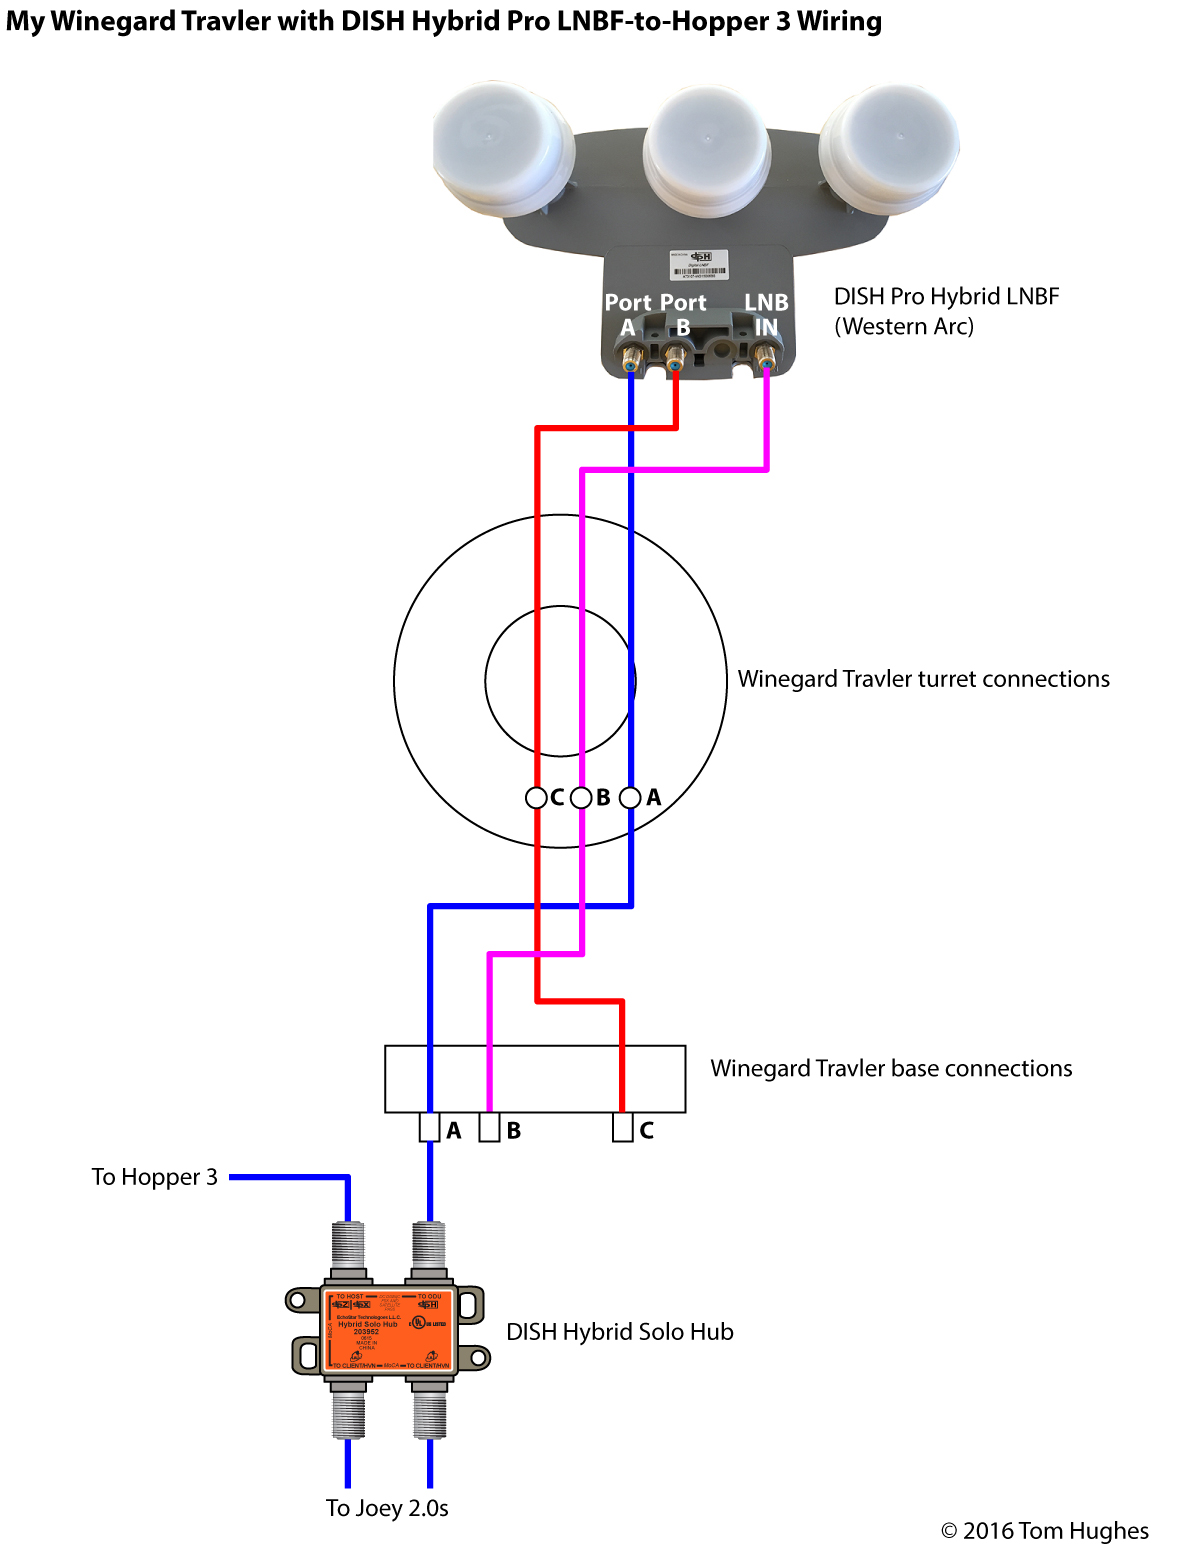 hopper super joey wiring diagram